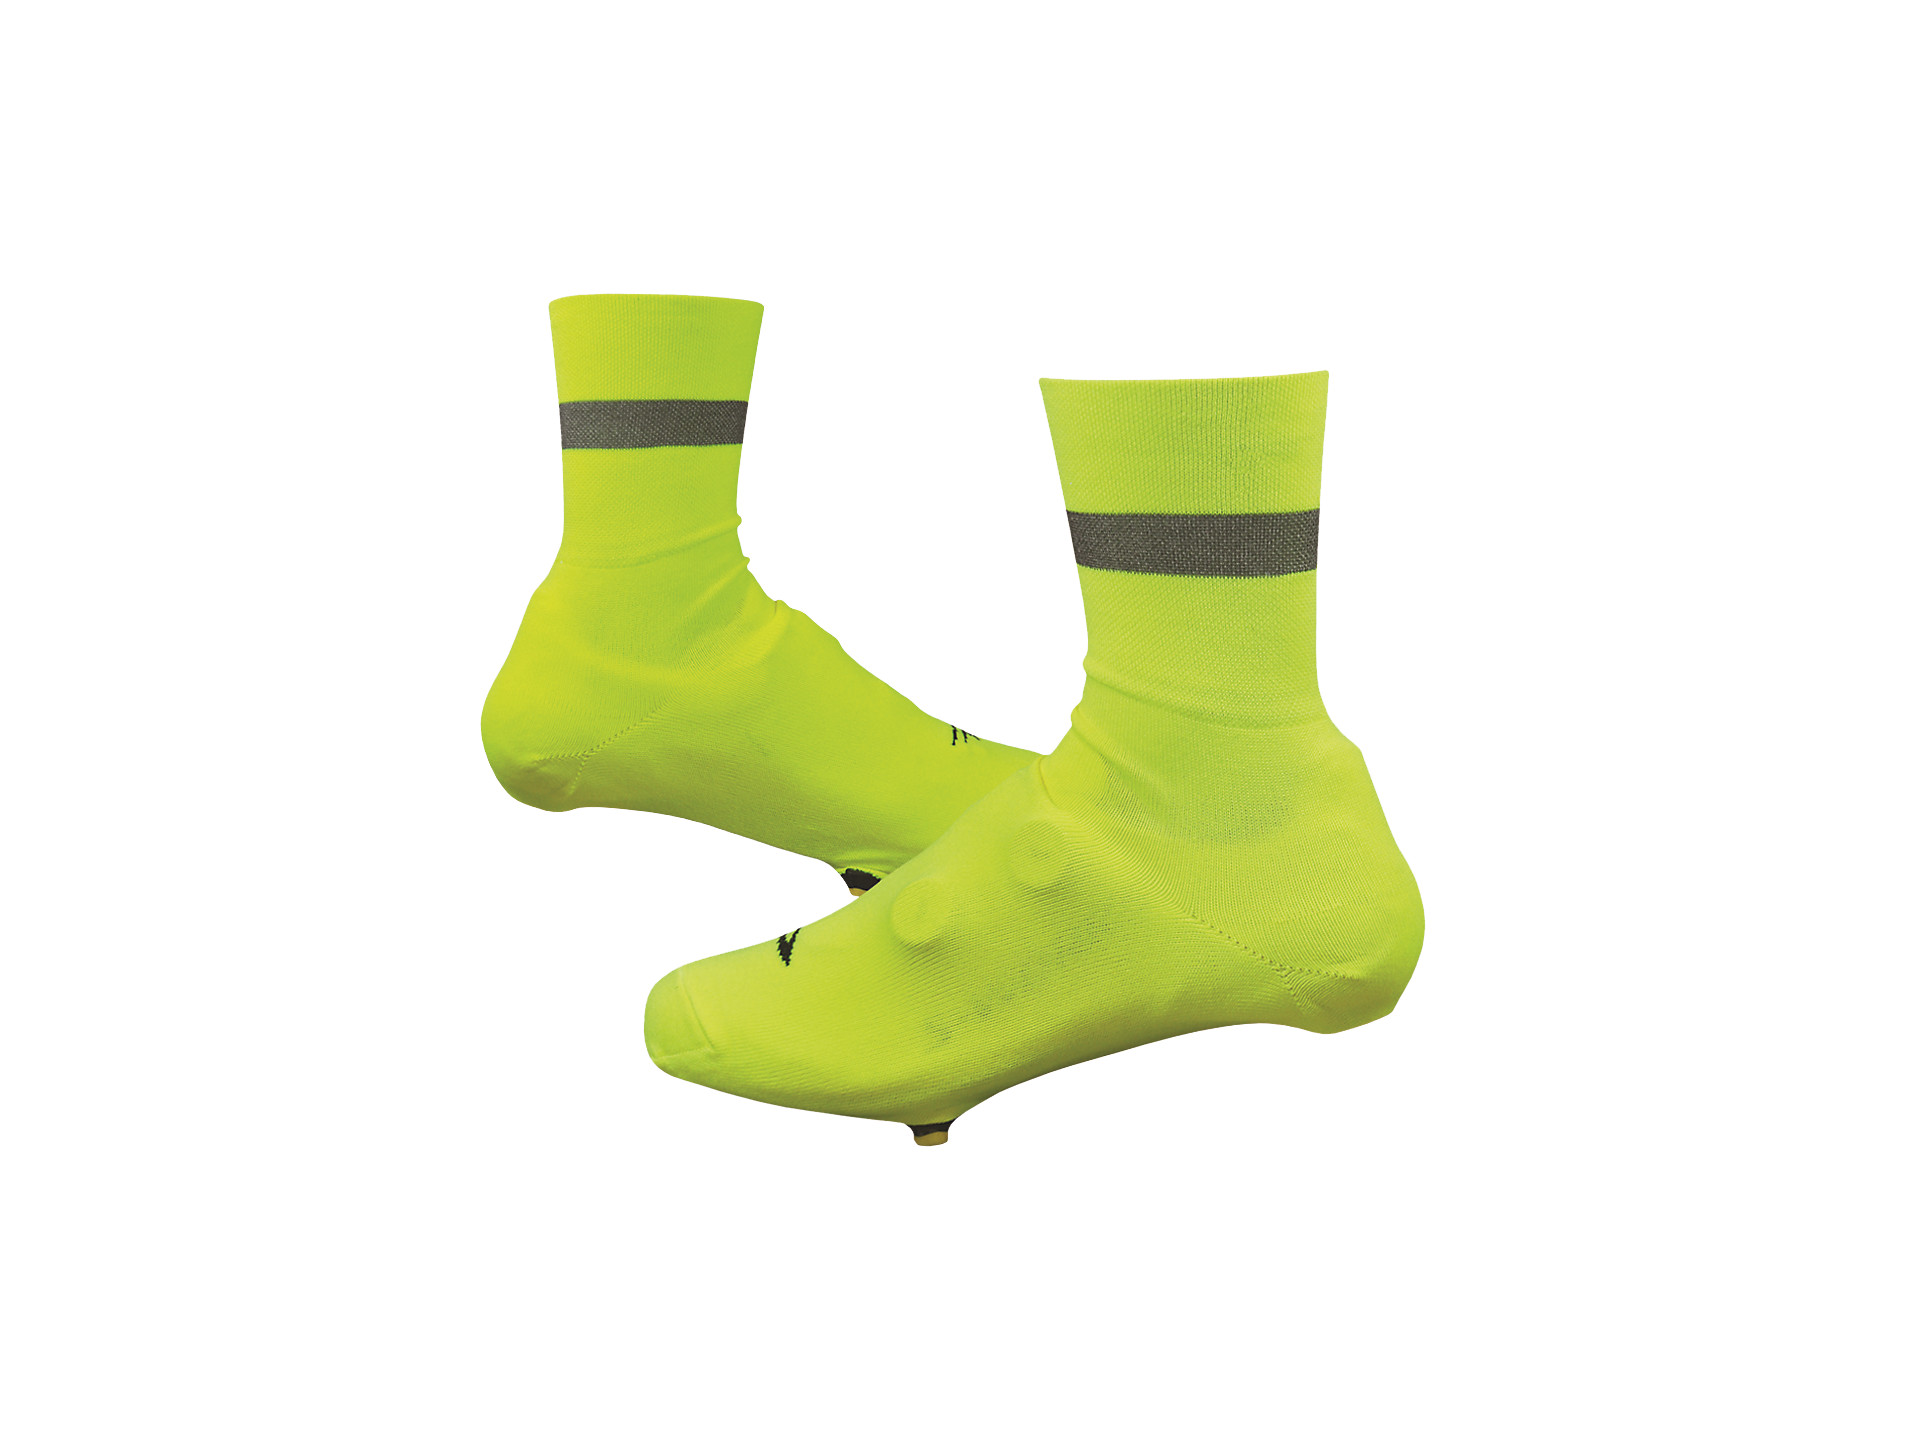 Brand New Endura Luminite Overshoe Cycling Shoe Covers Waterproof Small 